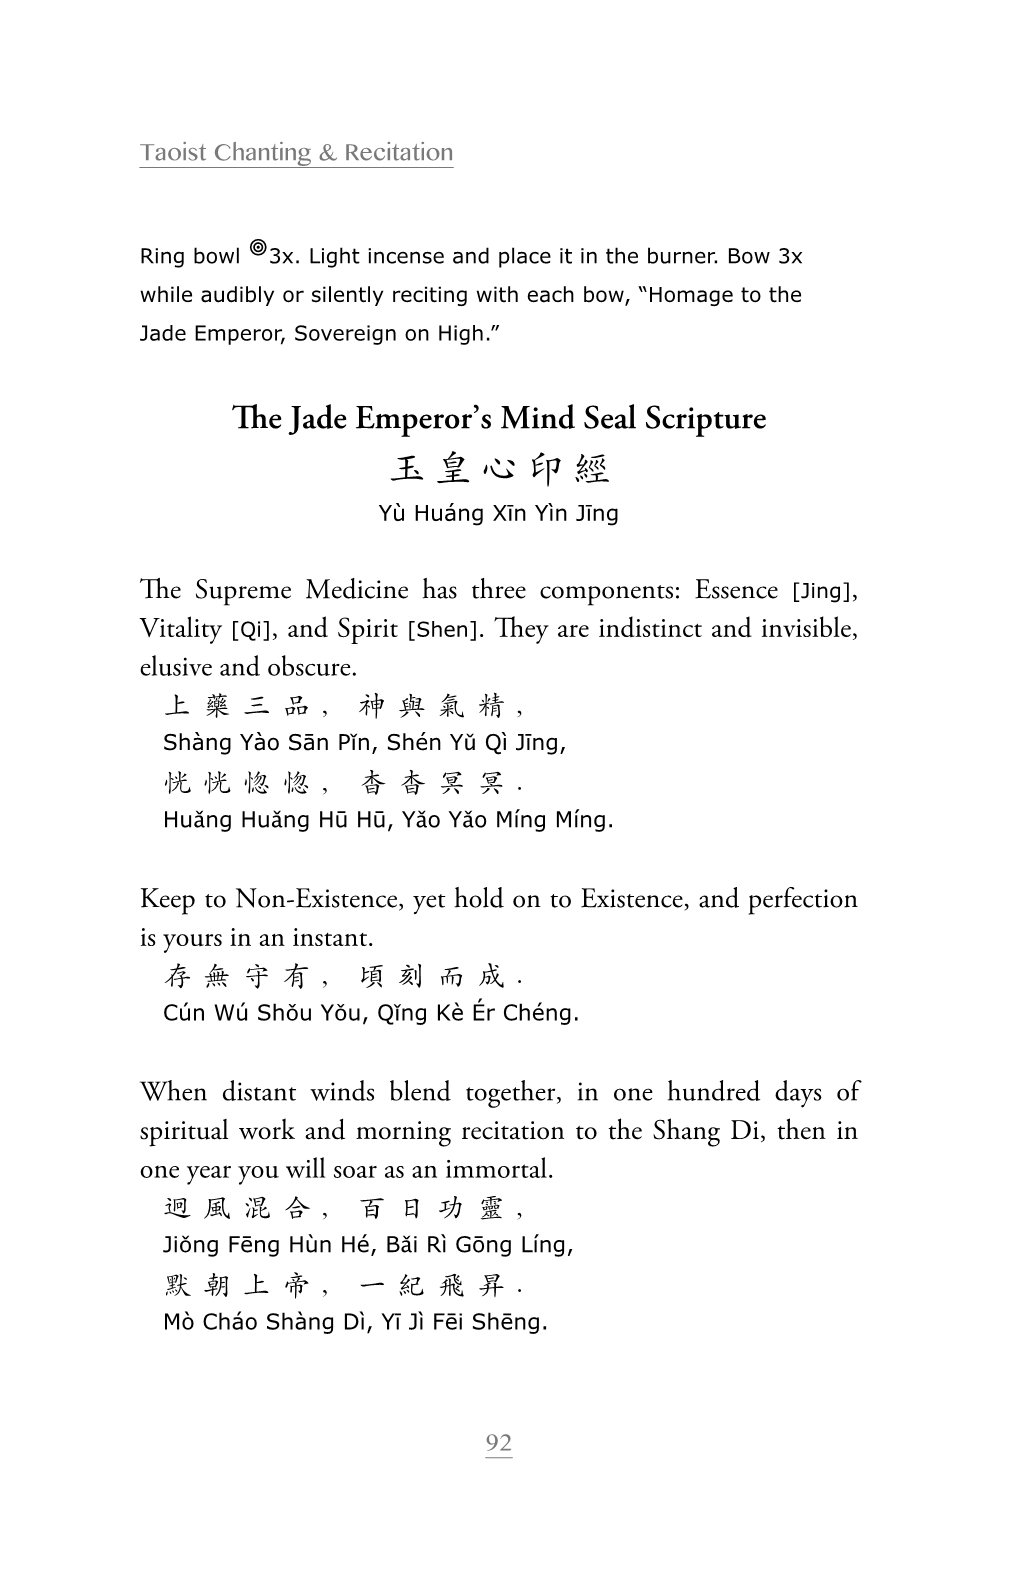 The Jade Emperor's Mind Seal Scripture